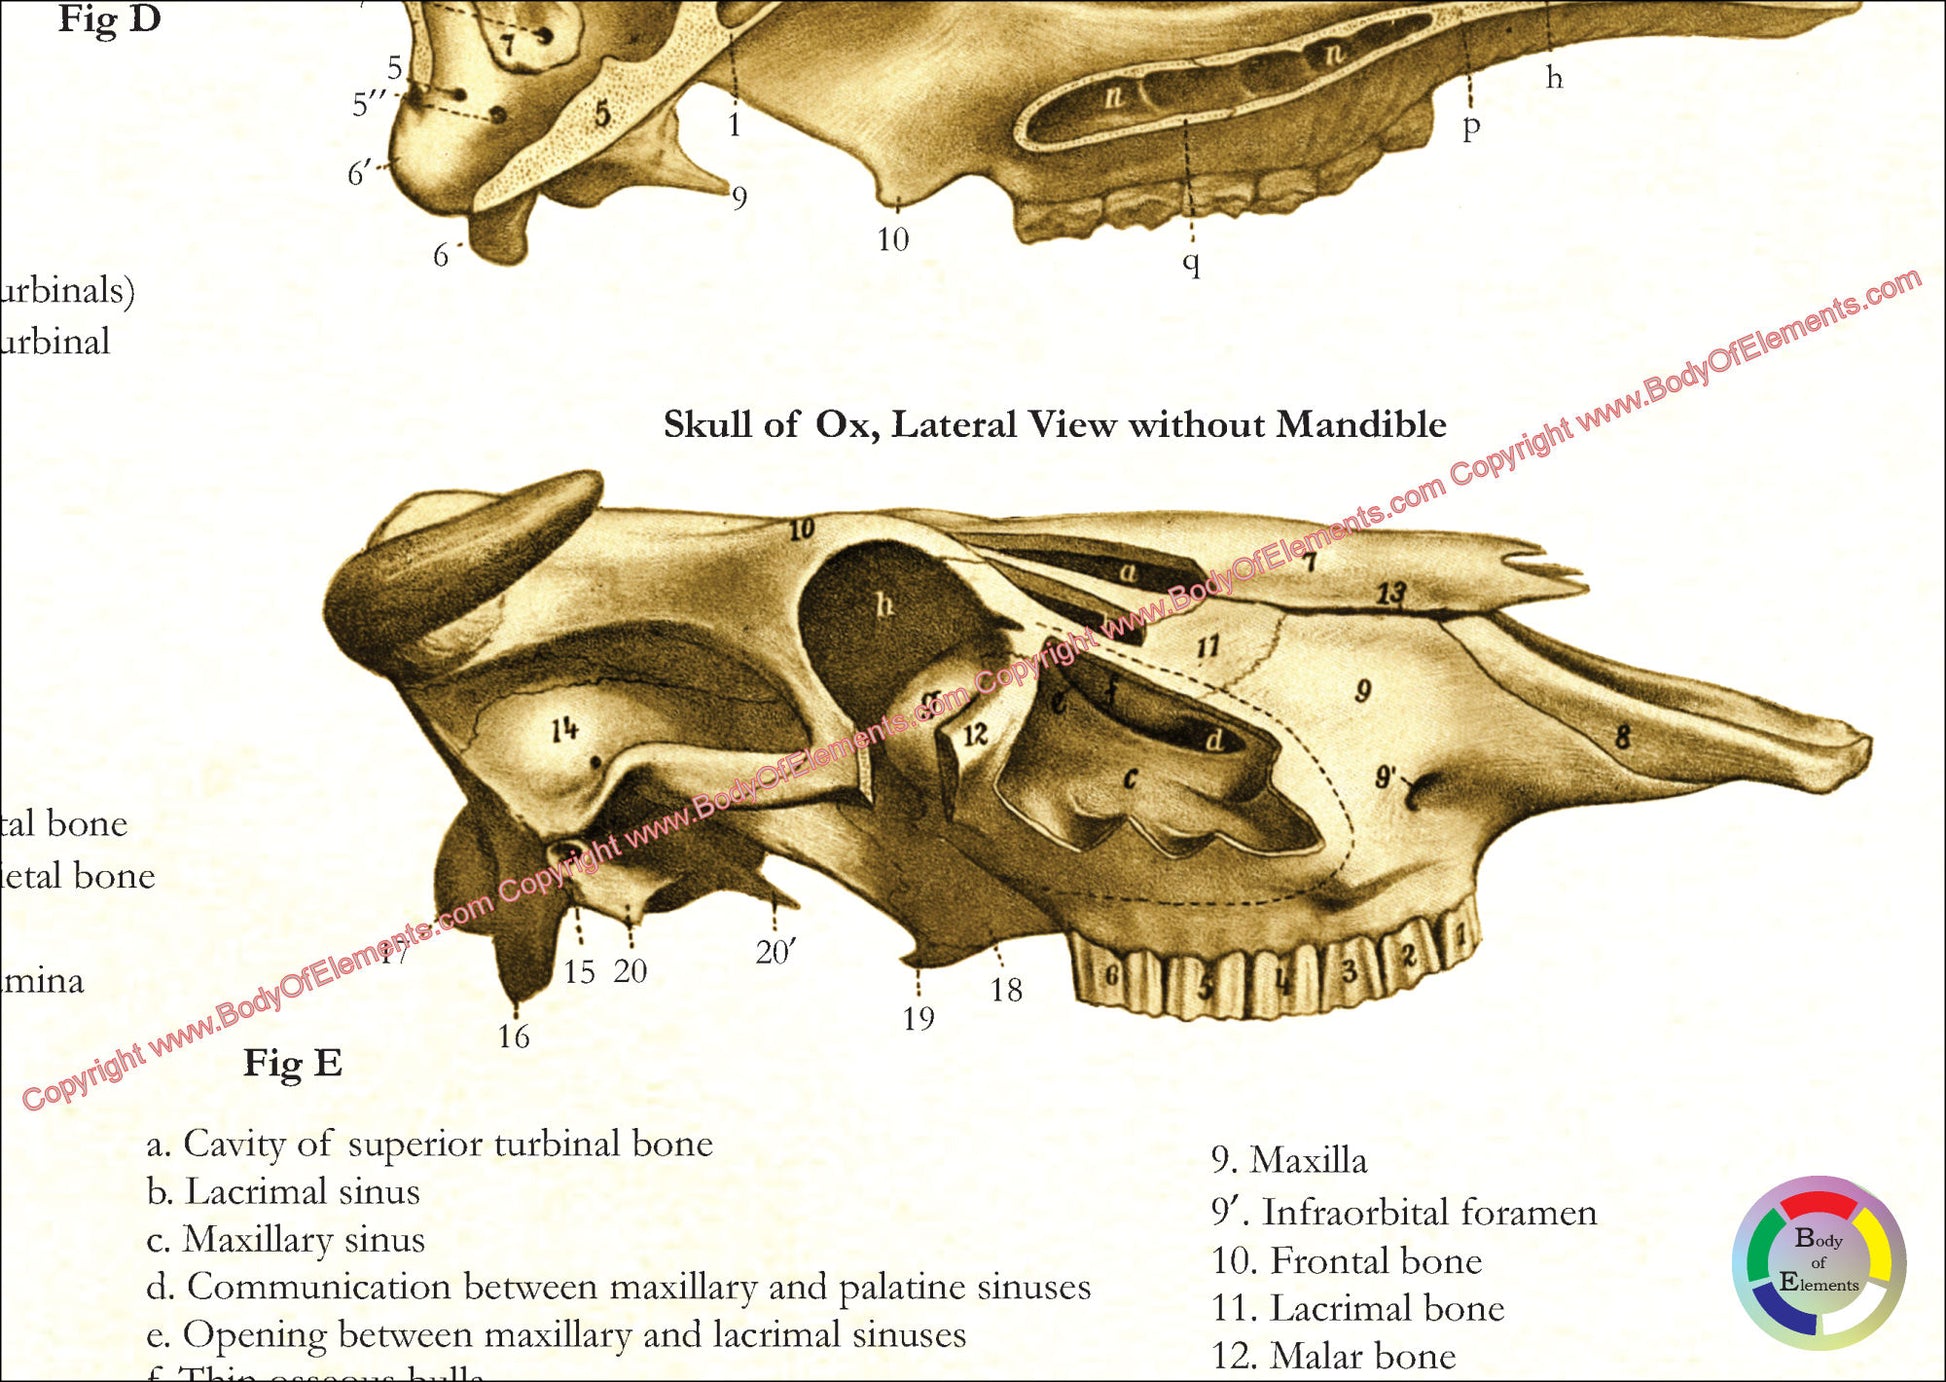 Cow Skull Anatomy Poster